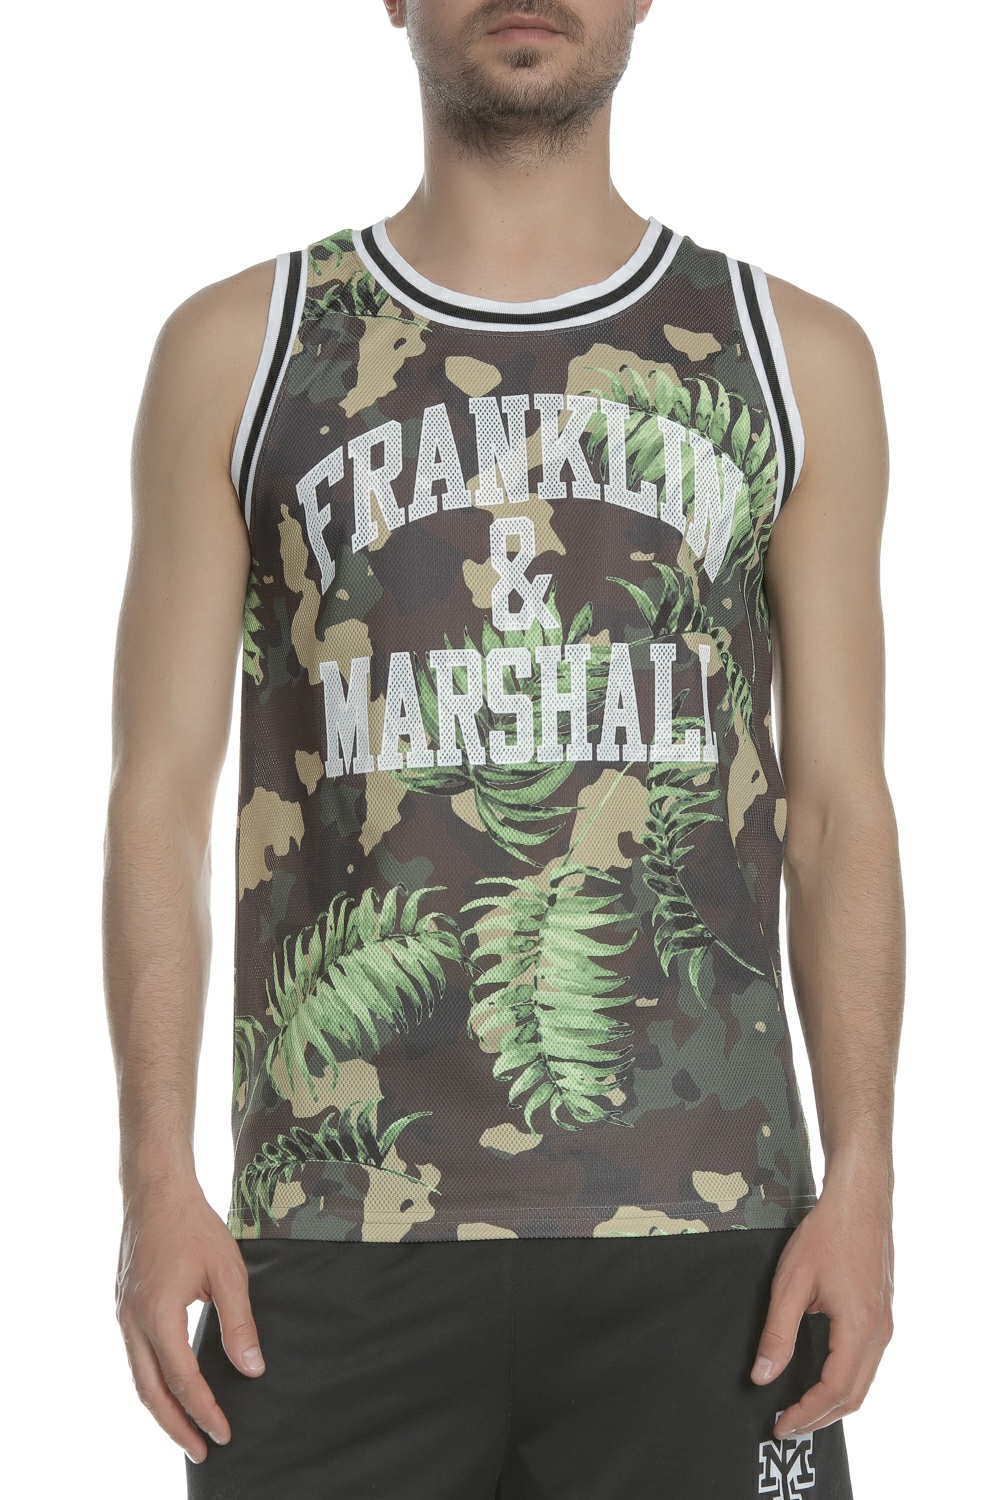 FRANKLIN & MARSHALL FRANKLIN & MARSHALL - Ανδρική μπλούζα UNI FRANKLIN & MARSHALL χακί μοτίβο